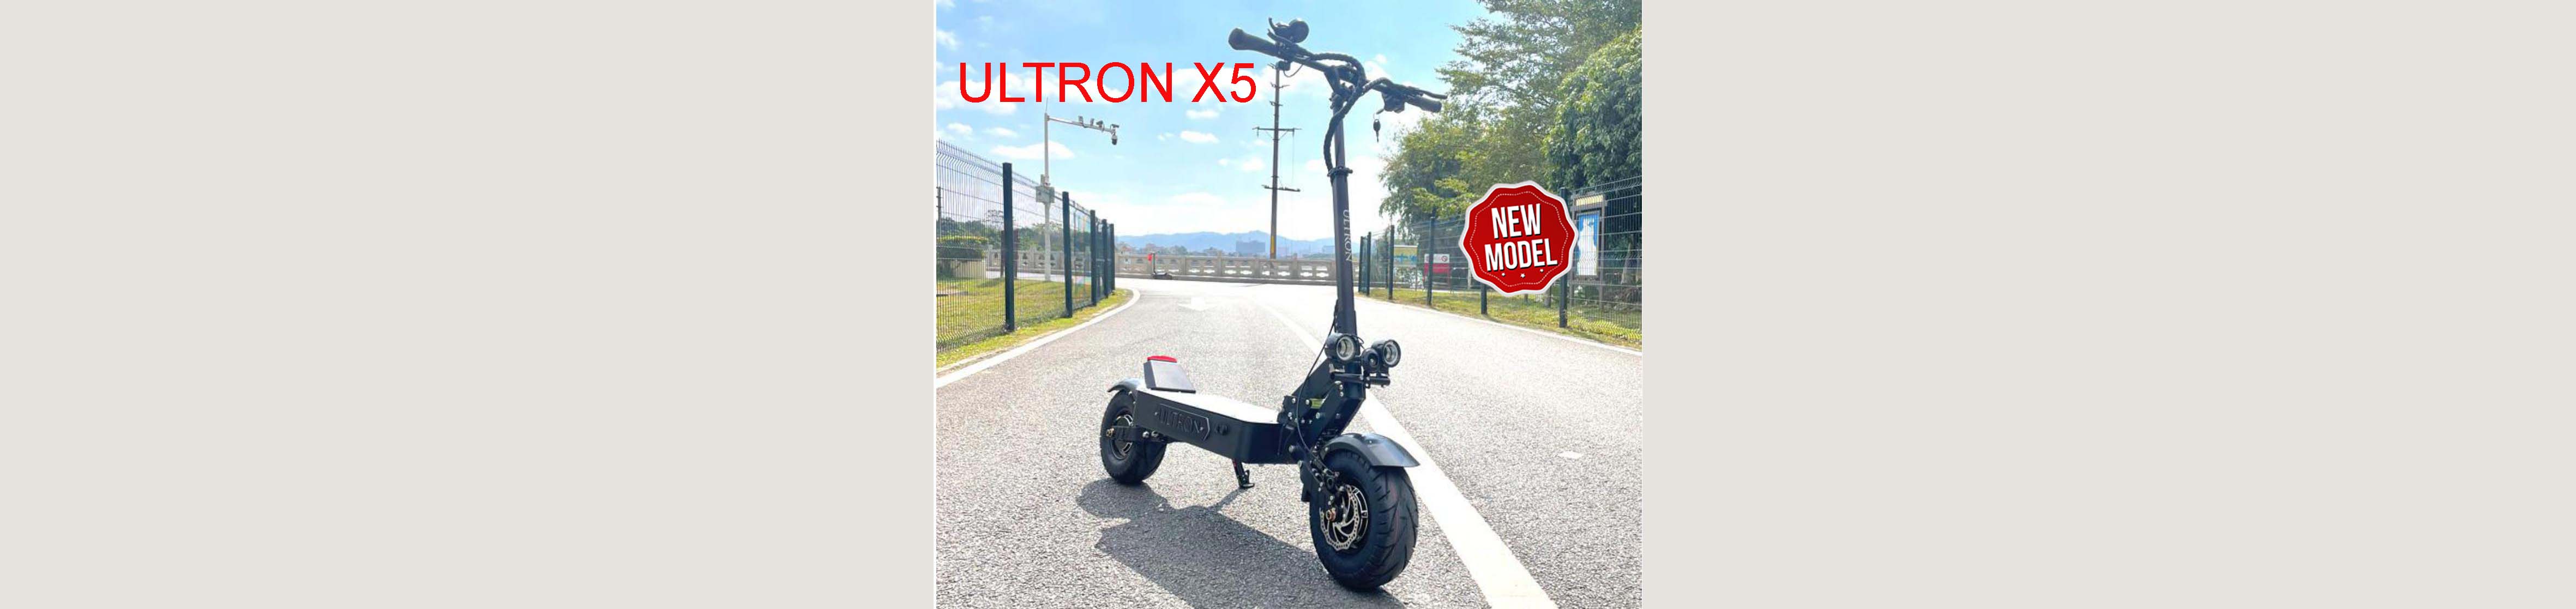 26) Ultron X5